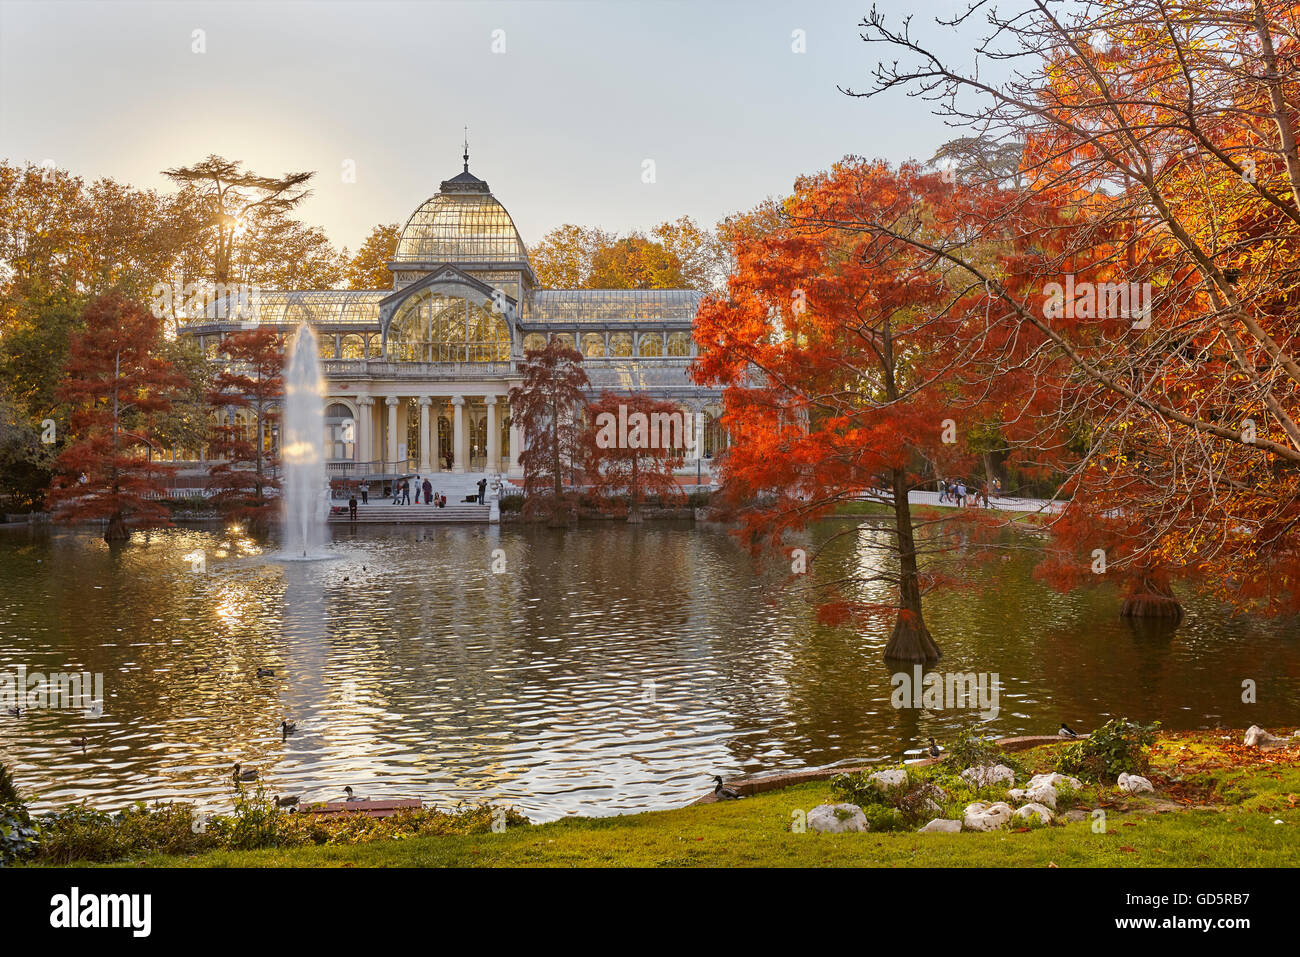 The Palacio de Cristal (Crystal Palace), located in the heart of The Buen Retiro Park. Madrid. Spain Stock Photo